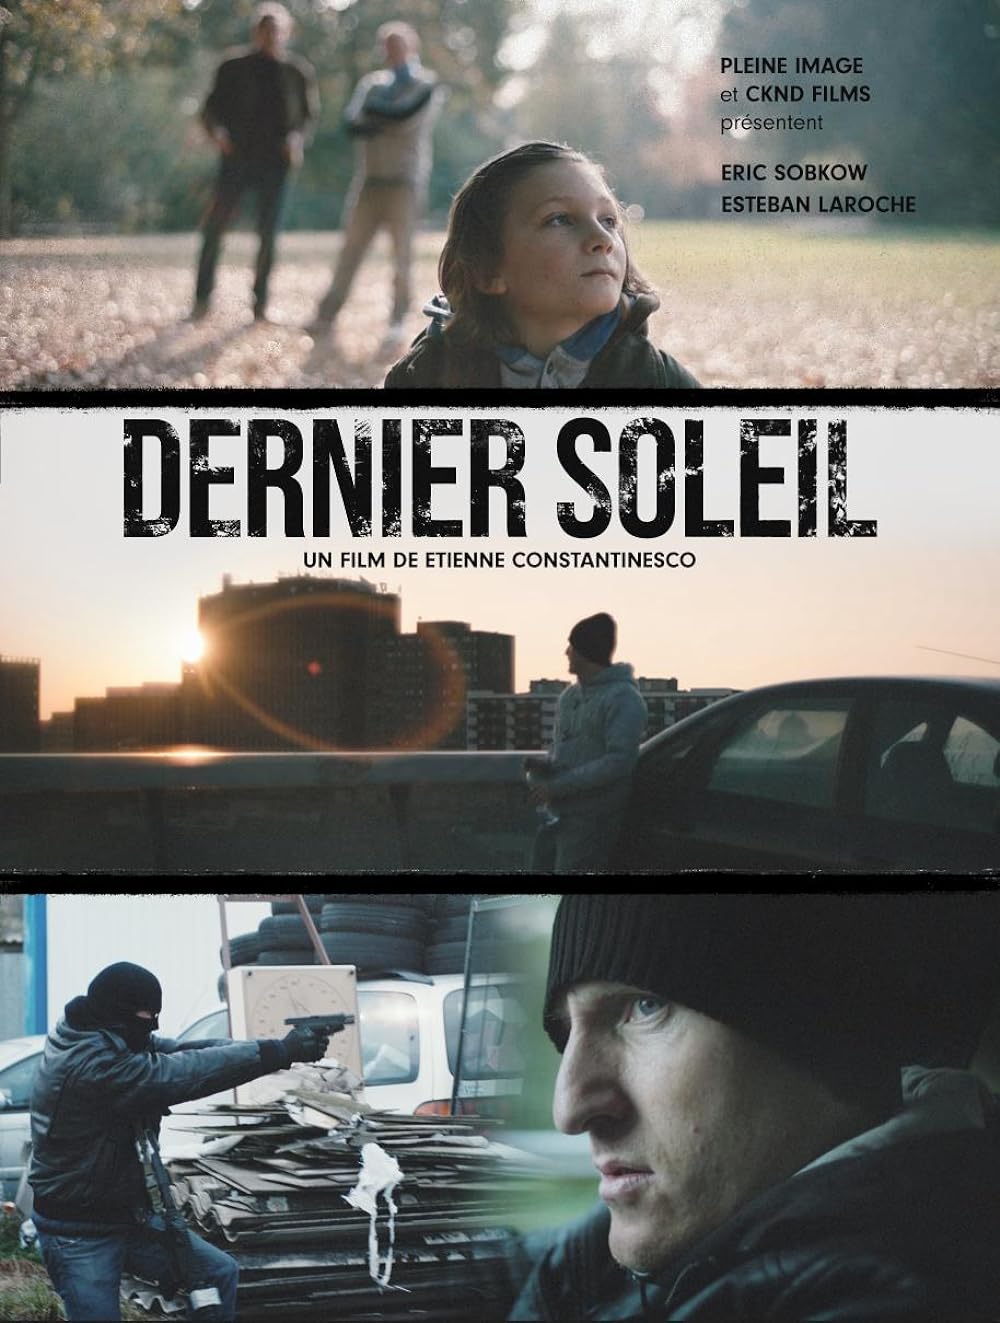 دانلود فیلم Dernier Soleil 2021